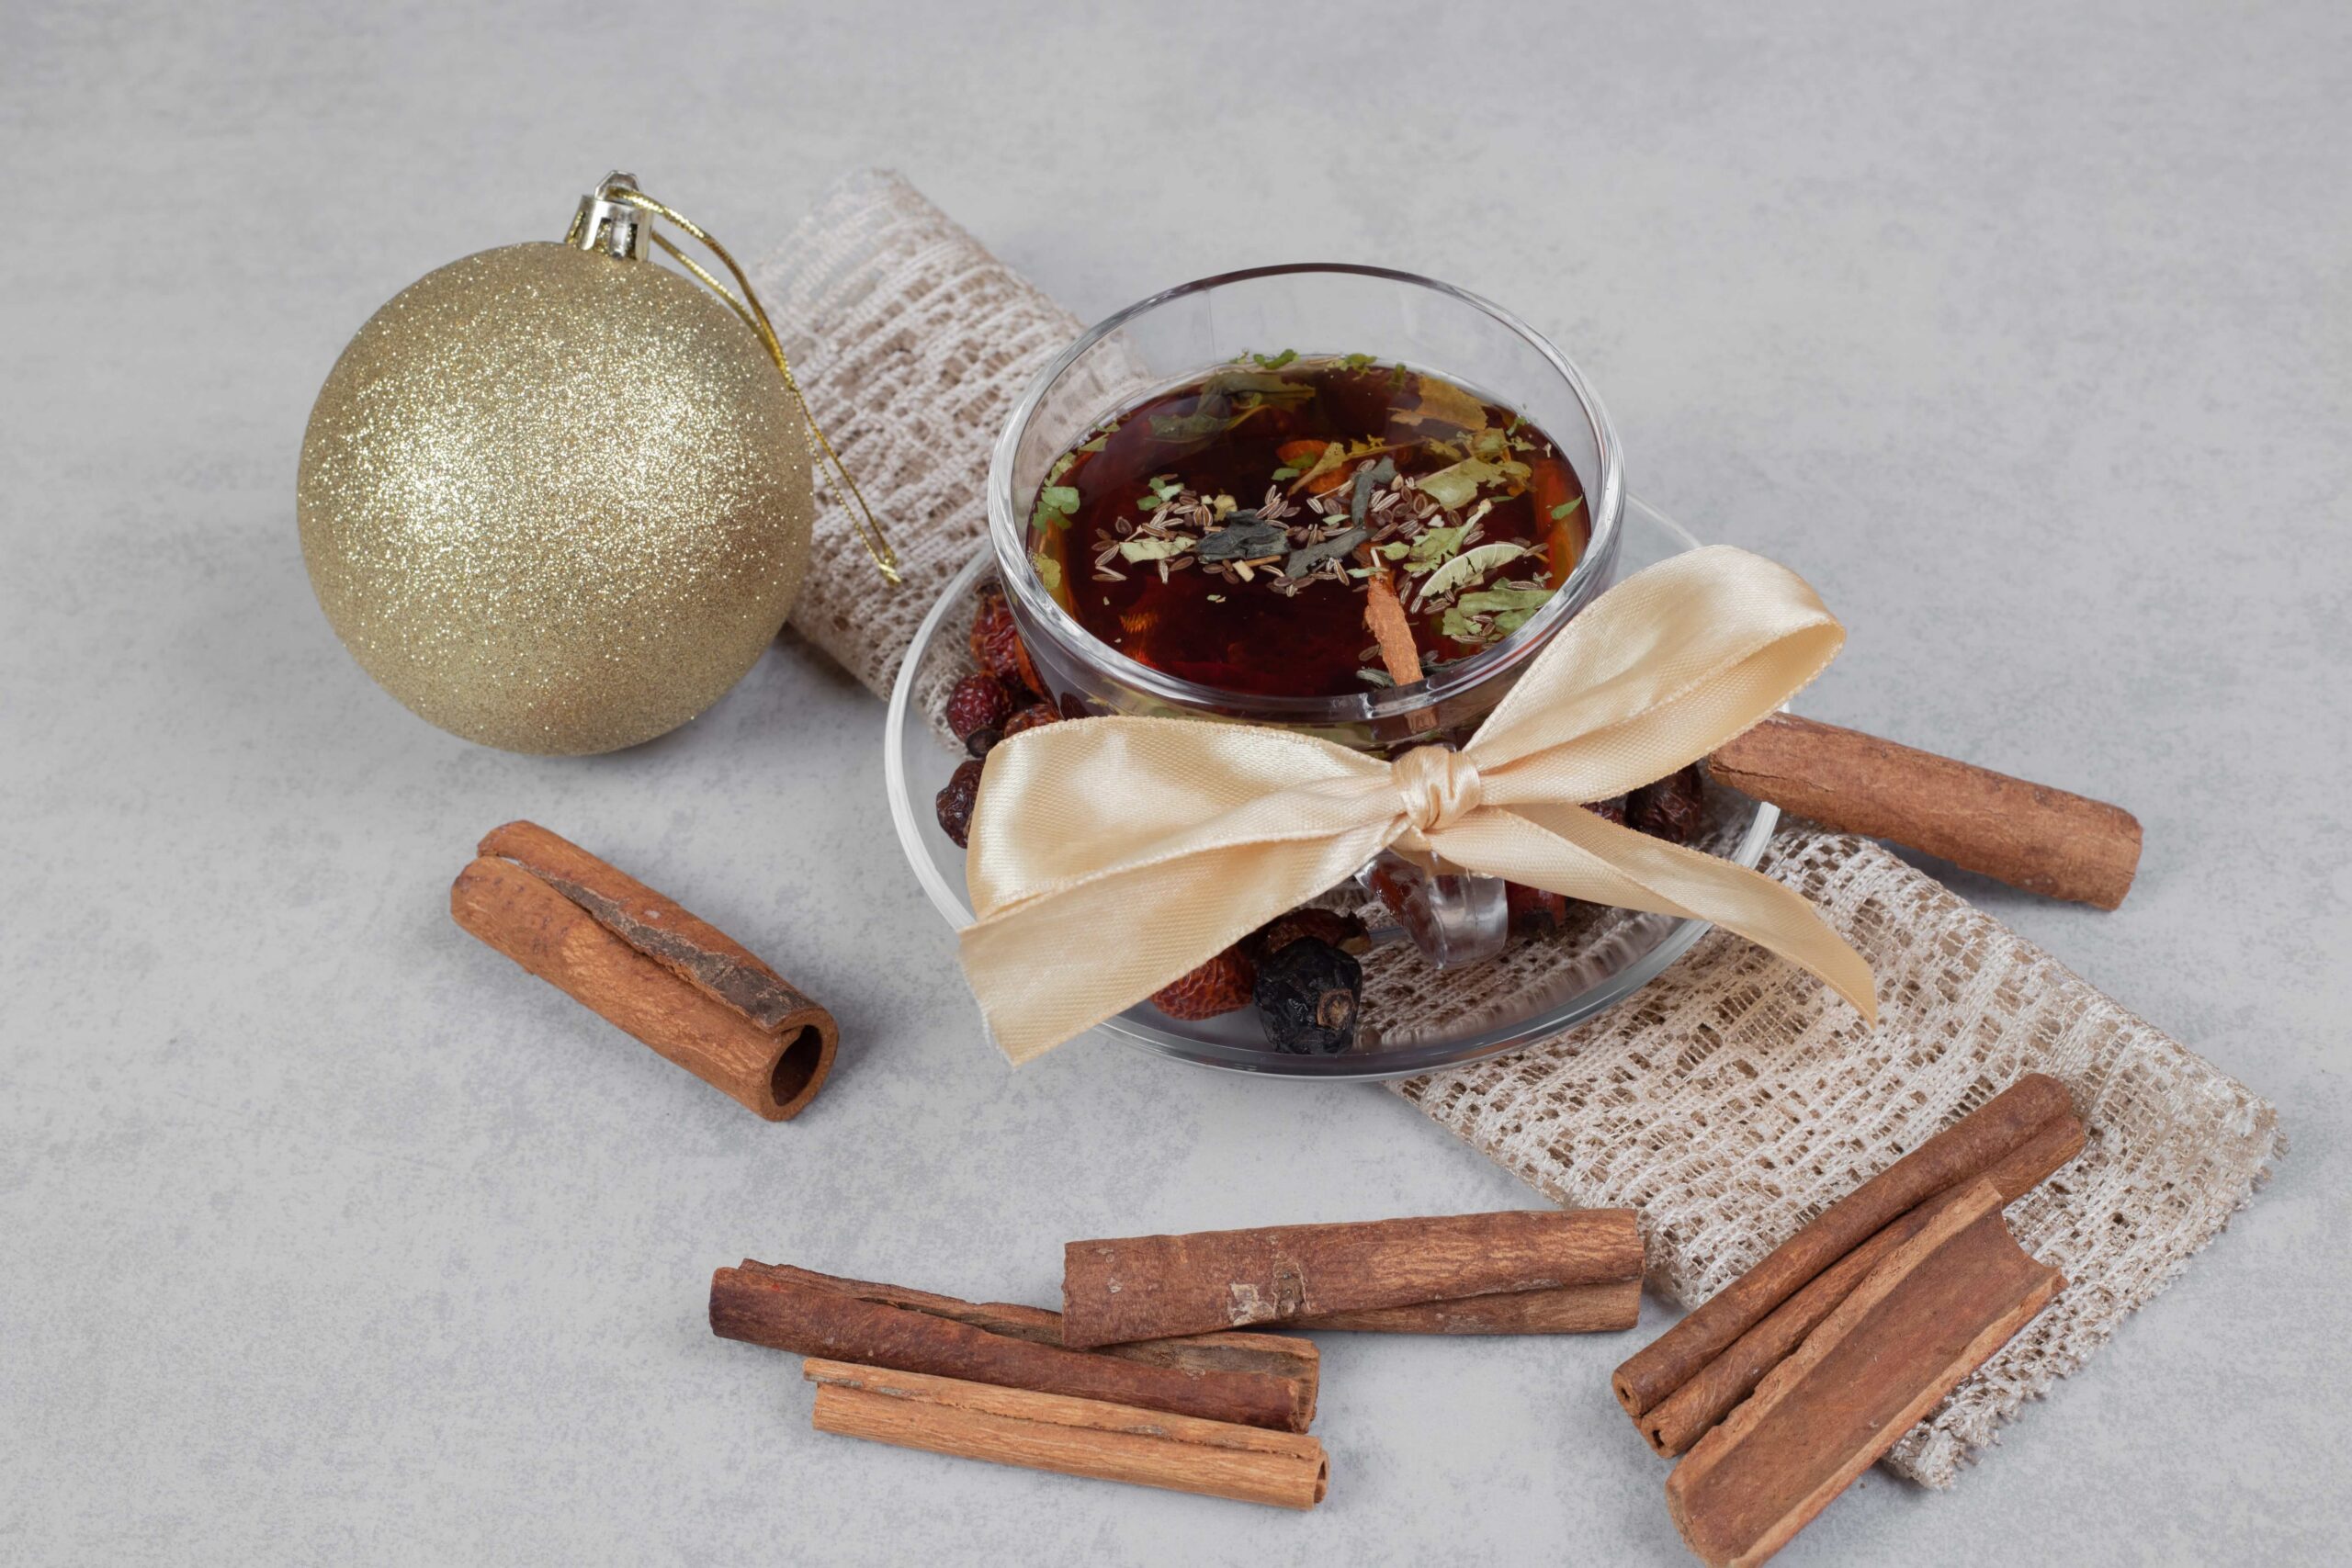 cup-of-tea-cinnamon-sticks-and-festive-ball-on-white-table-high-quality-photo-min (1)